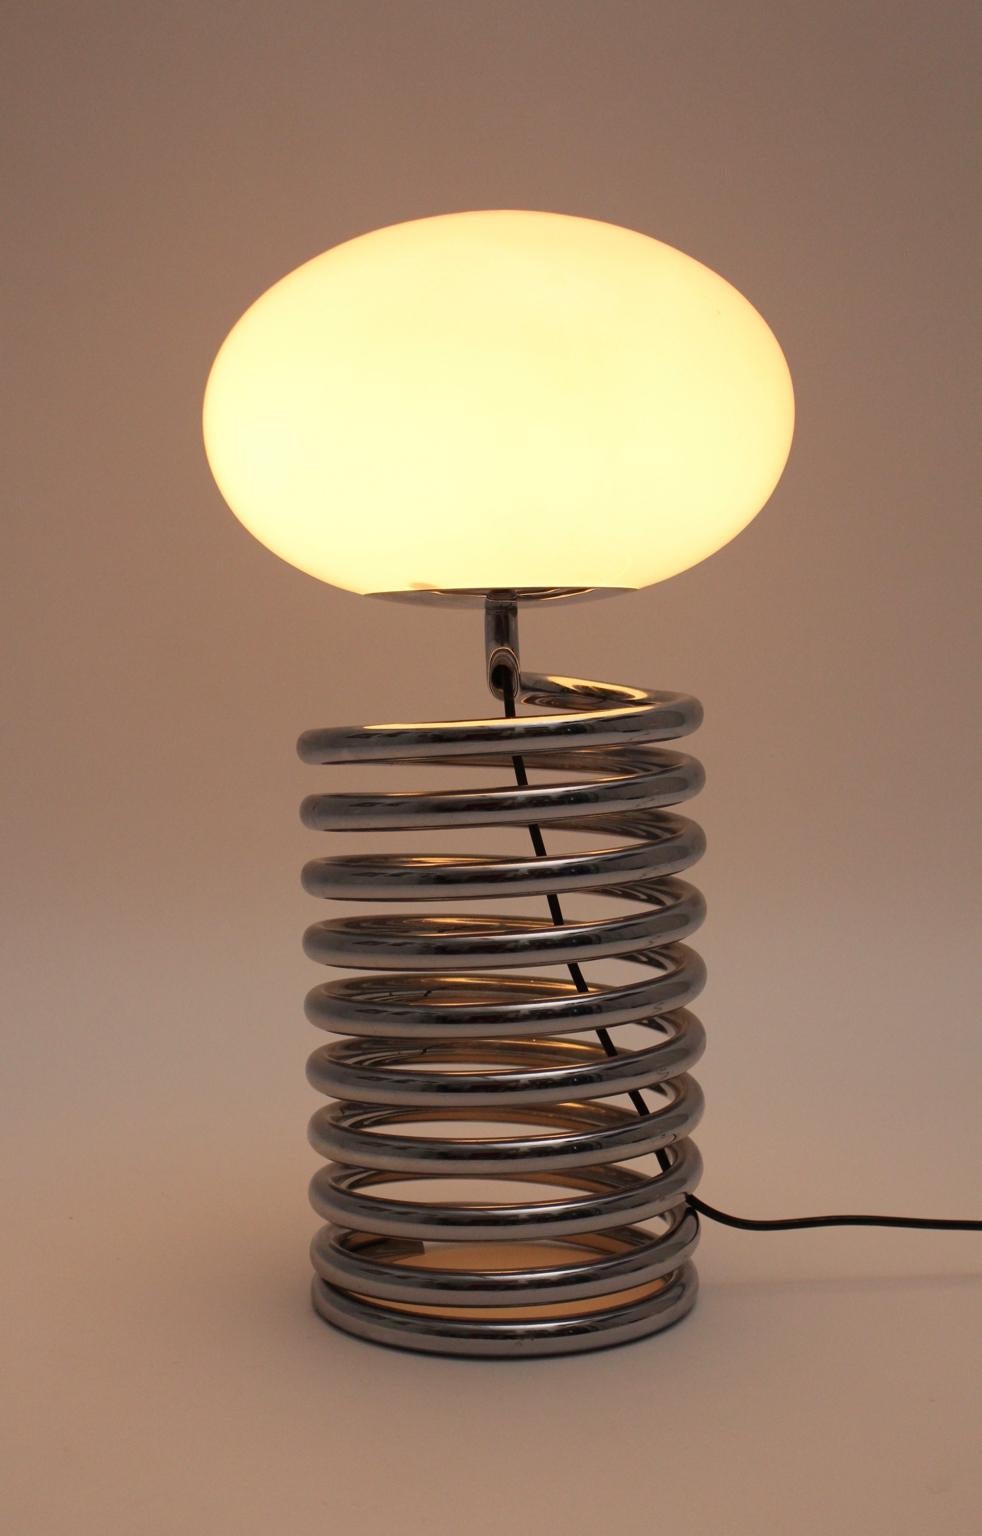 Mid-Century Modern Vintage Chromed Glass Table Lamp by Ingo Maurer 1968, Germany For Sale 2